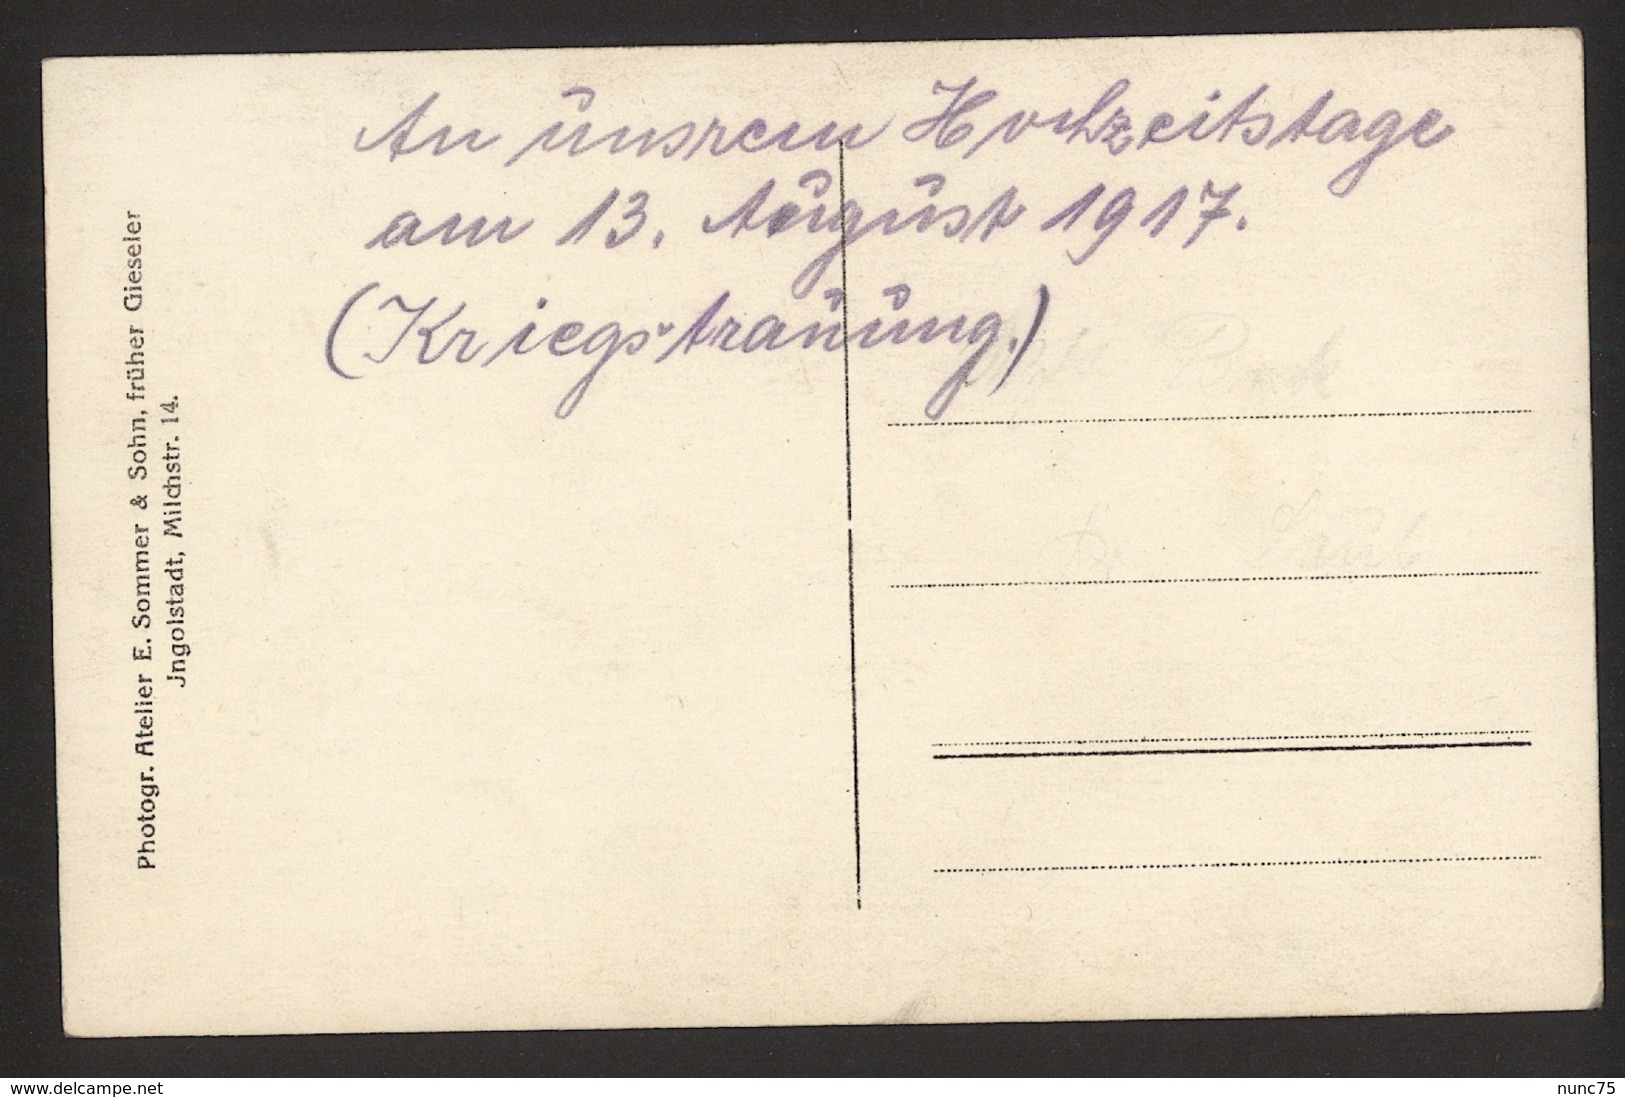 Postkarte 1917 - Ingolstadt Feldpost Kriegstrauung Hochzeit - Atelier E. Sommer - Gieseler - EK1 - 1. Weltkrieg - 1. WK - Ingolstadt